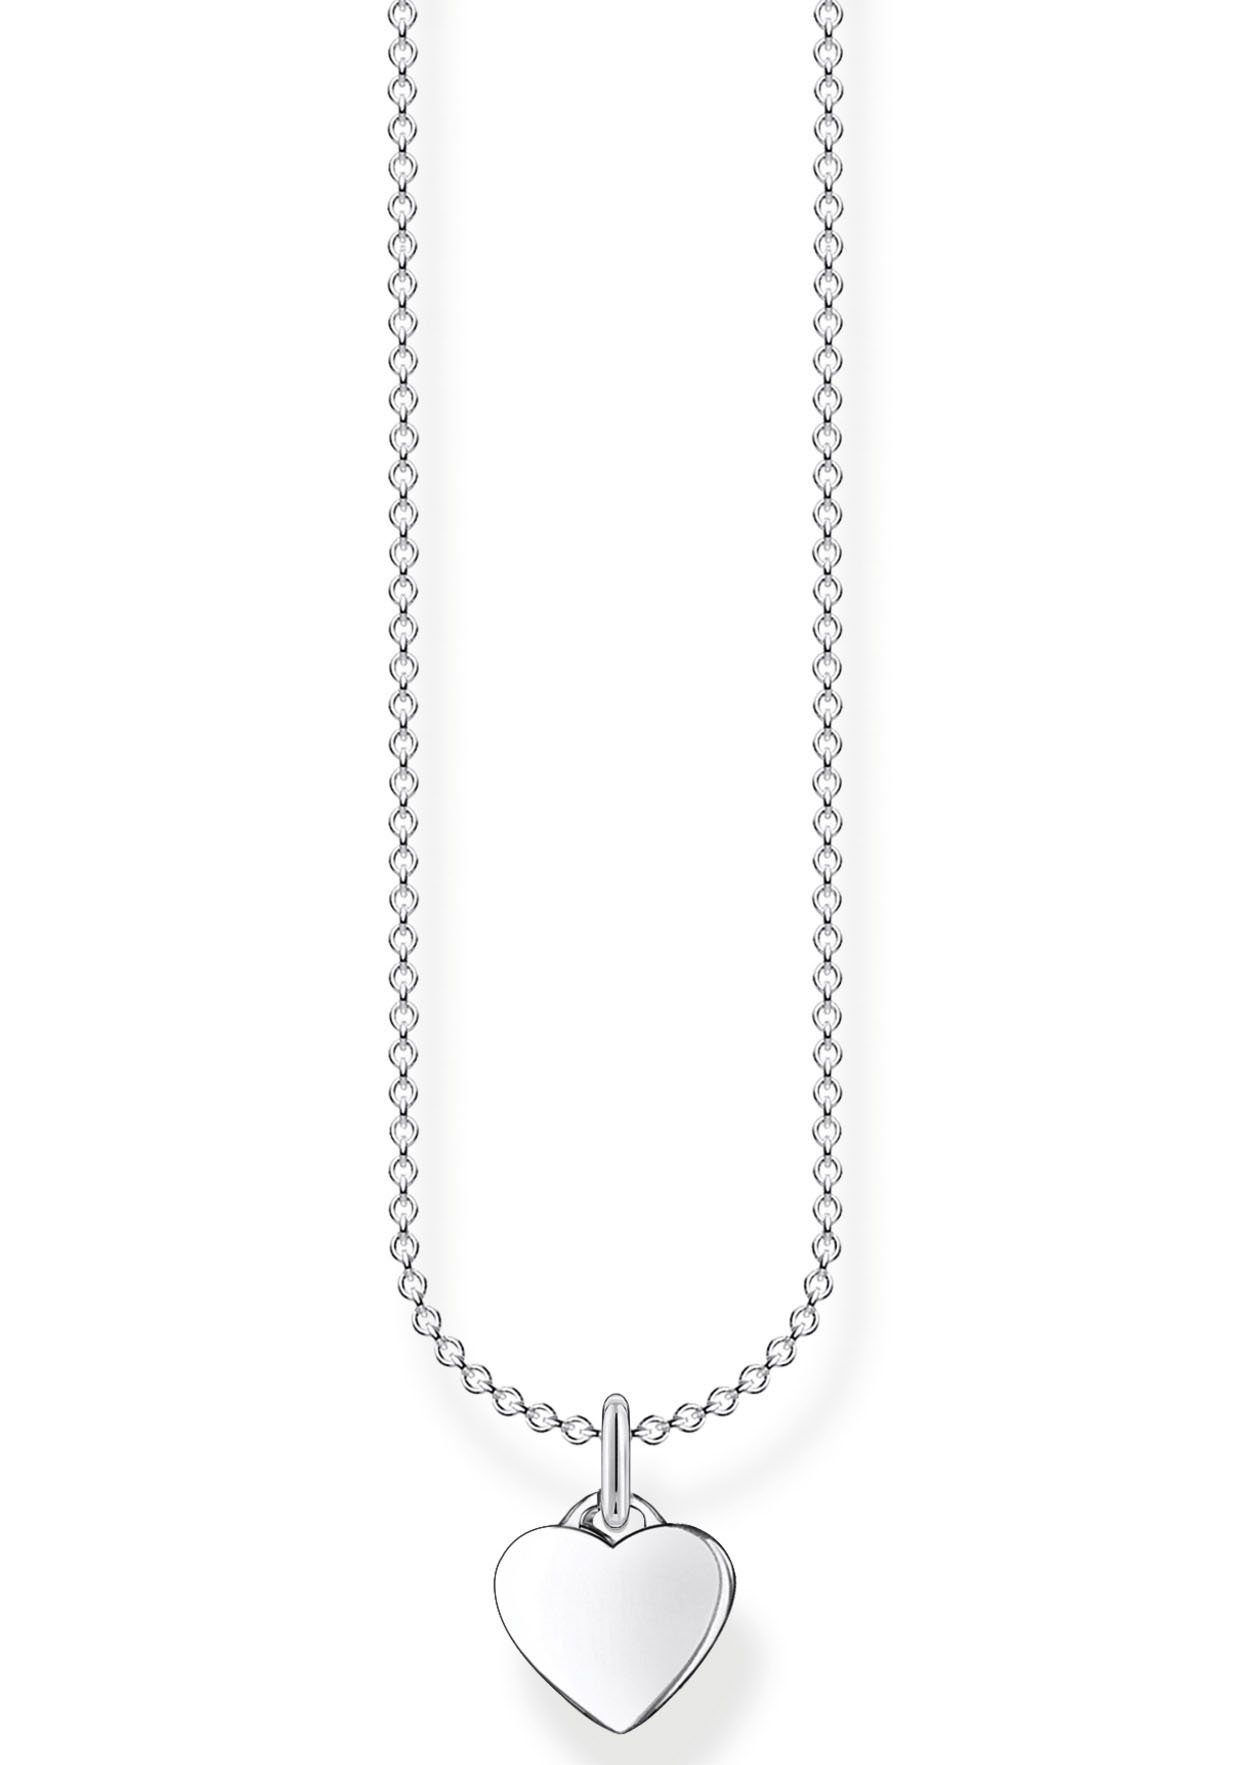 THOMAS SABO Kette mit Anhänger Herz silber, KE2049-001-21-L45V, Gesamtlänge  ca. 45 cm, verstellbar | Silberketten